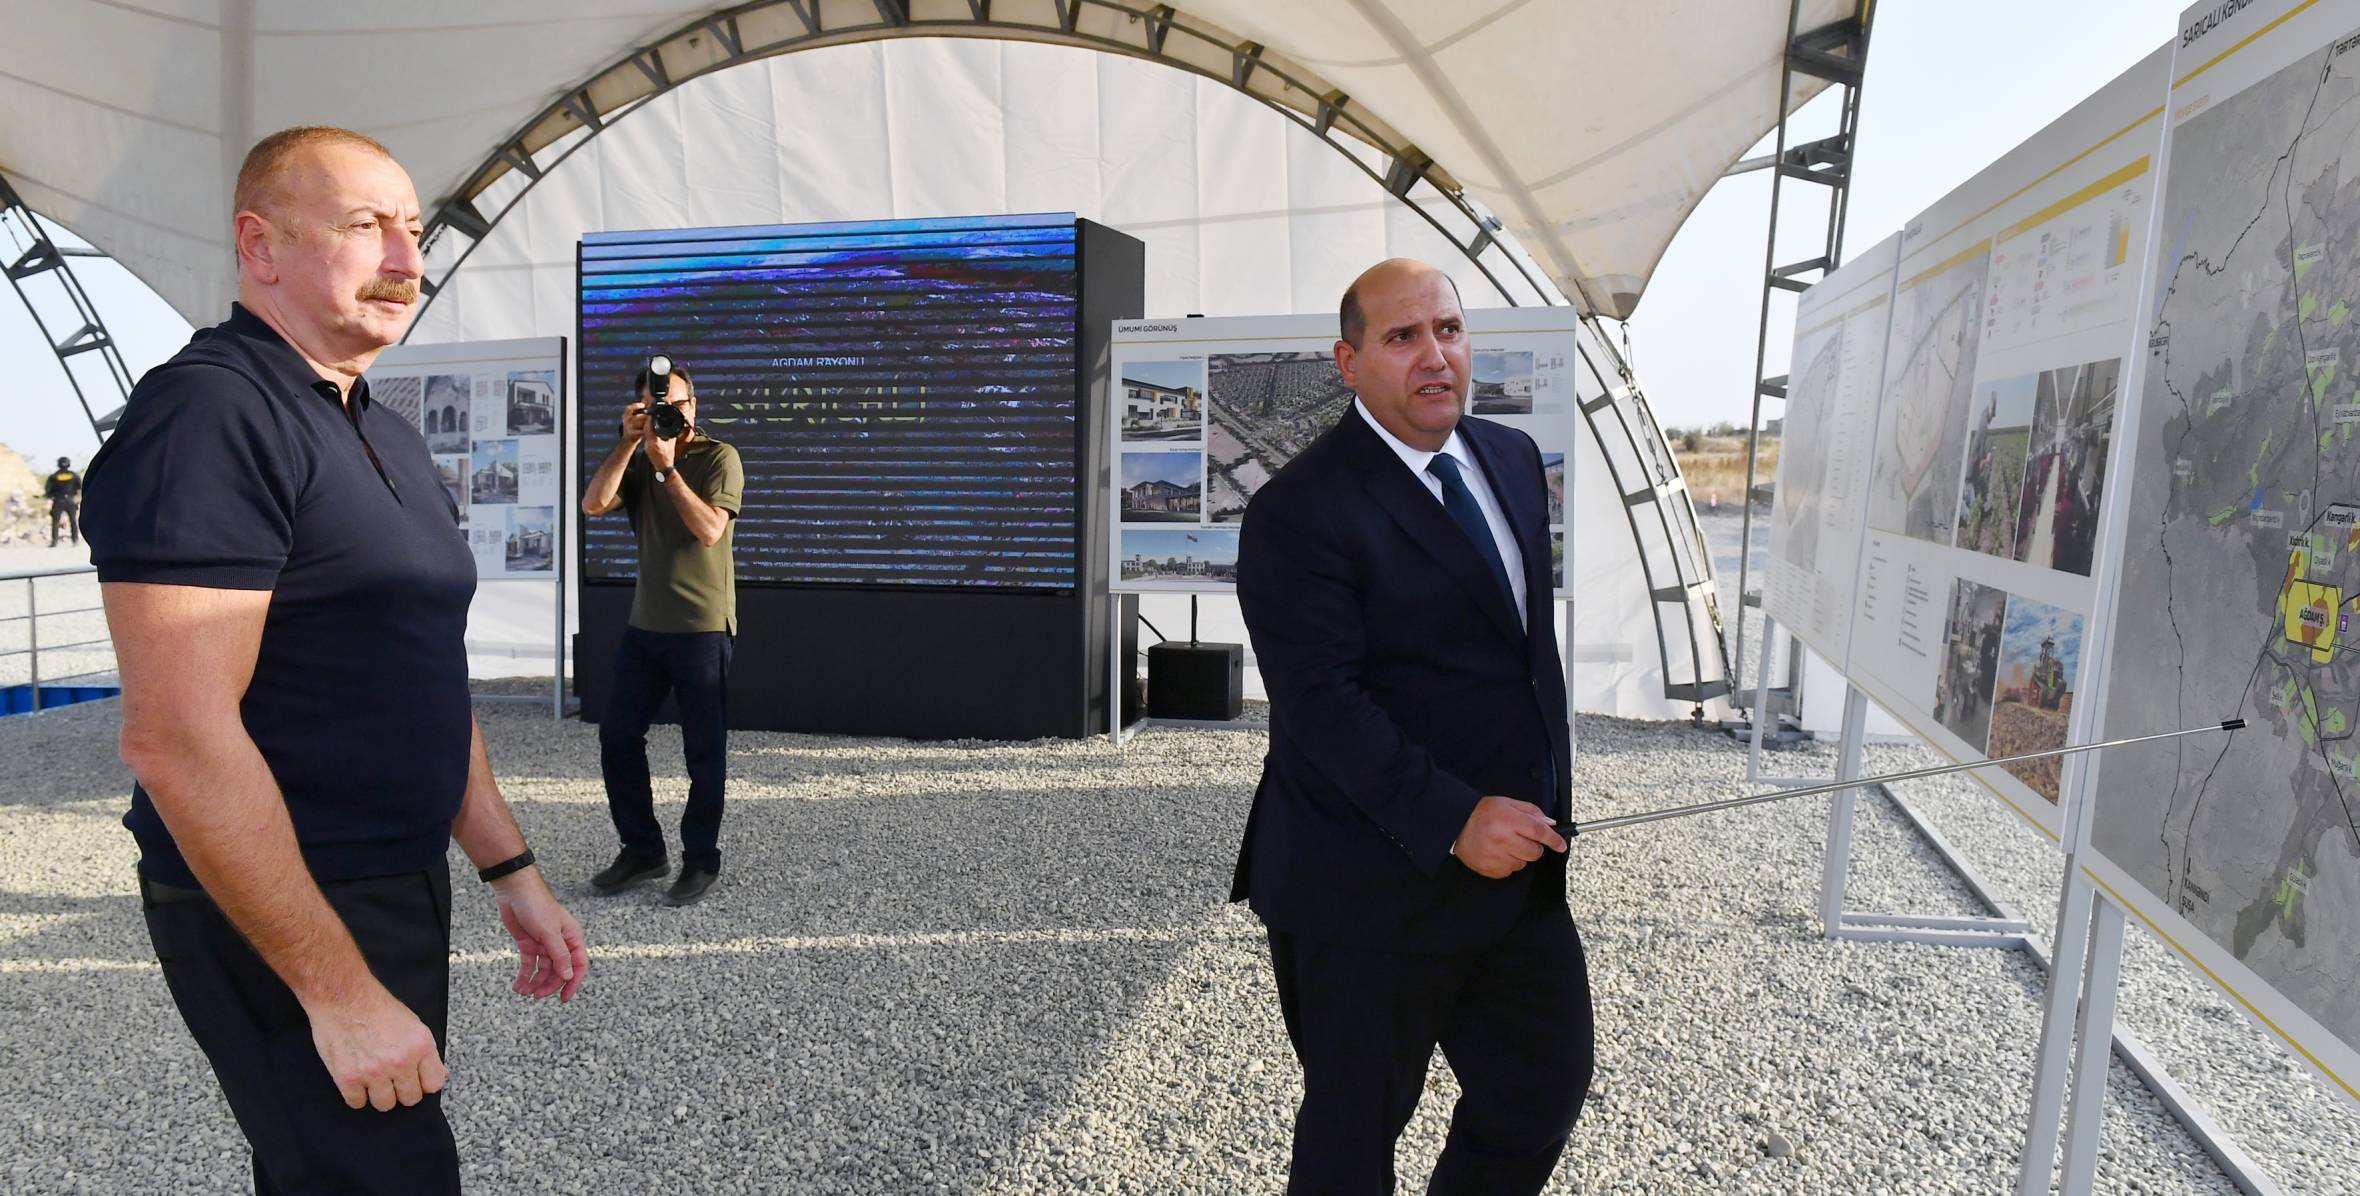 Ilham Aliyev laid the foundation stone for Sarijali village